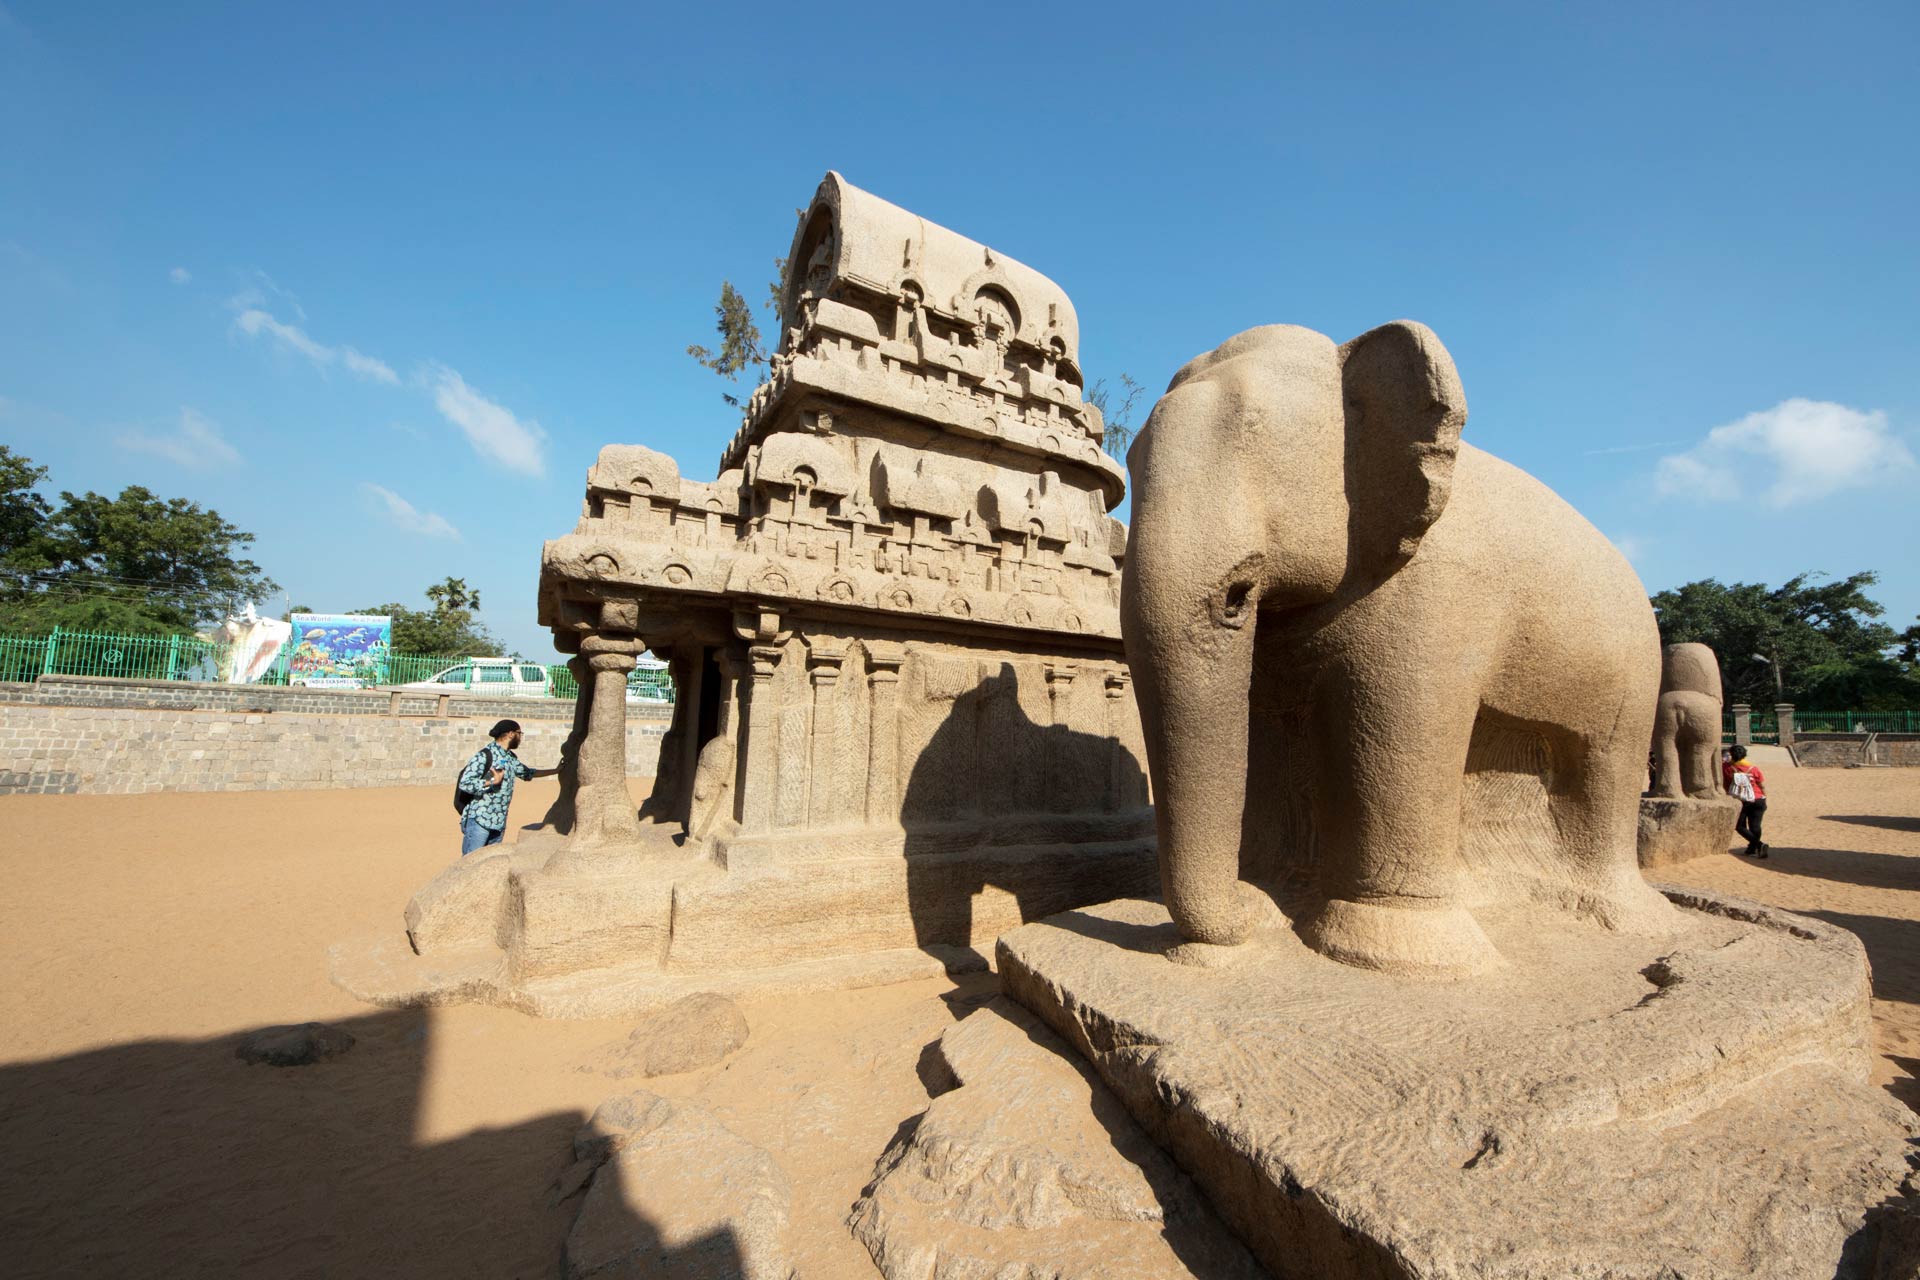 Elephant sculpture next to Nakula Sahadeva Ratha at Pancha Pandava Rathas, Mahabalipuram, Tamil Nadu, India